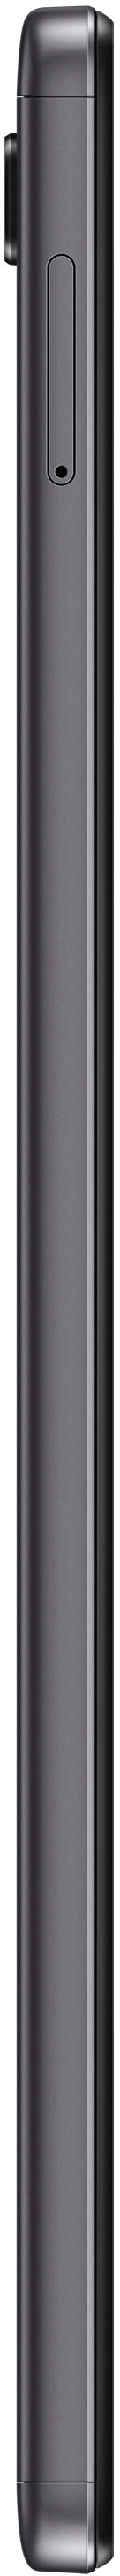  Samsung Electronics Galaxy Tab A Lite 8.7, 32GB, Dark Gray  (LTE T-Mobile & WiFi) - SM-T227UZAAXAU (2021) US Model & Warranty (Renewed)